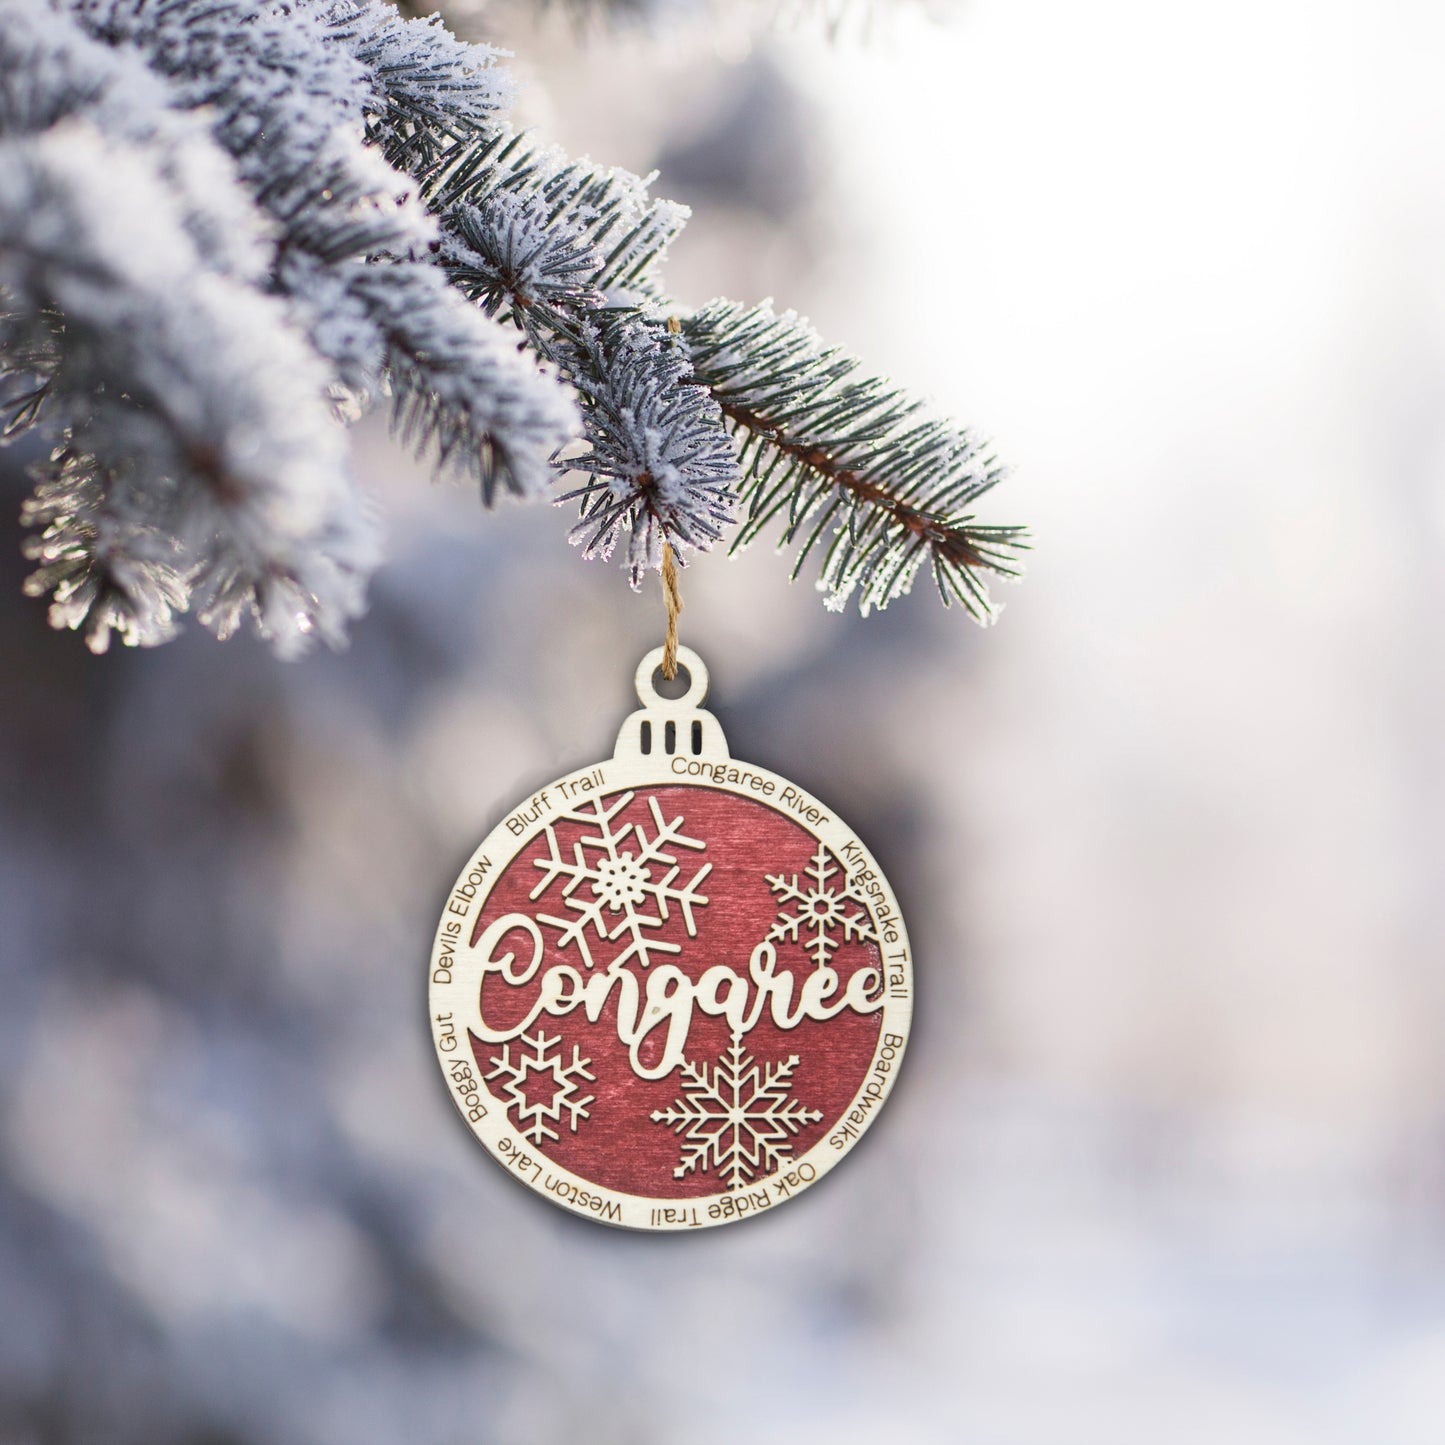 Congaree National Park Christmas Ornament